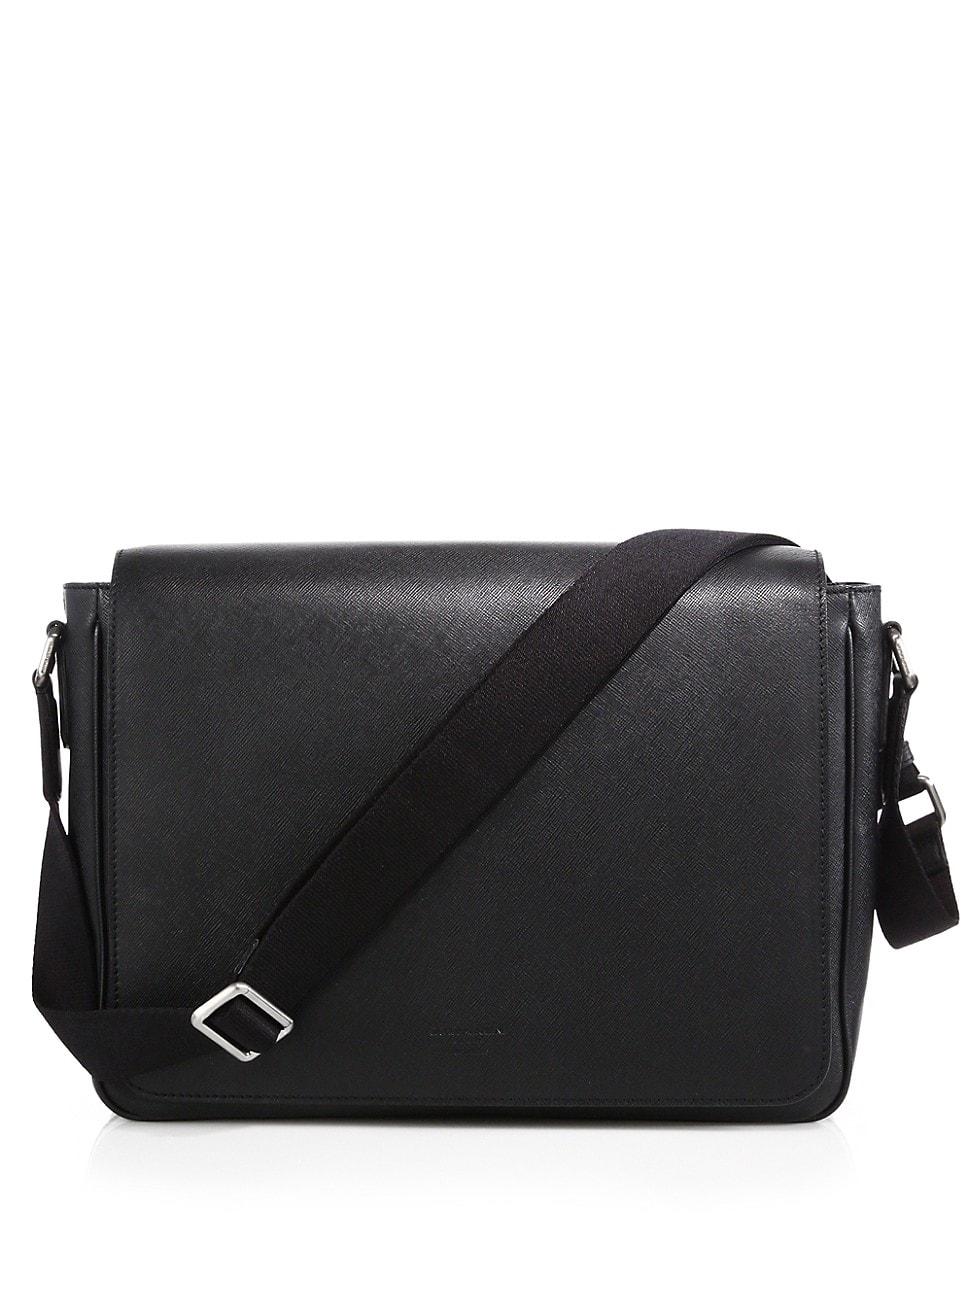 Giorgio Armani Leather Messenger Bag in Black for Men - Lyst